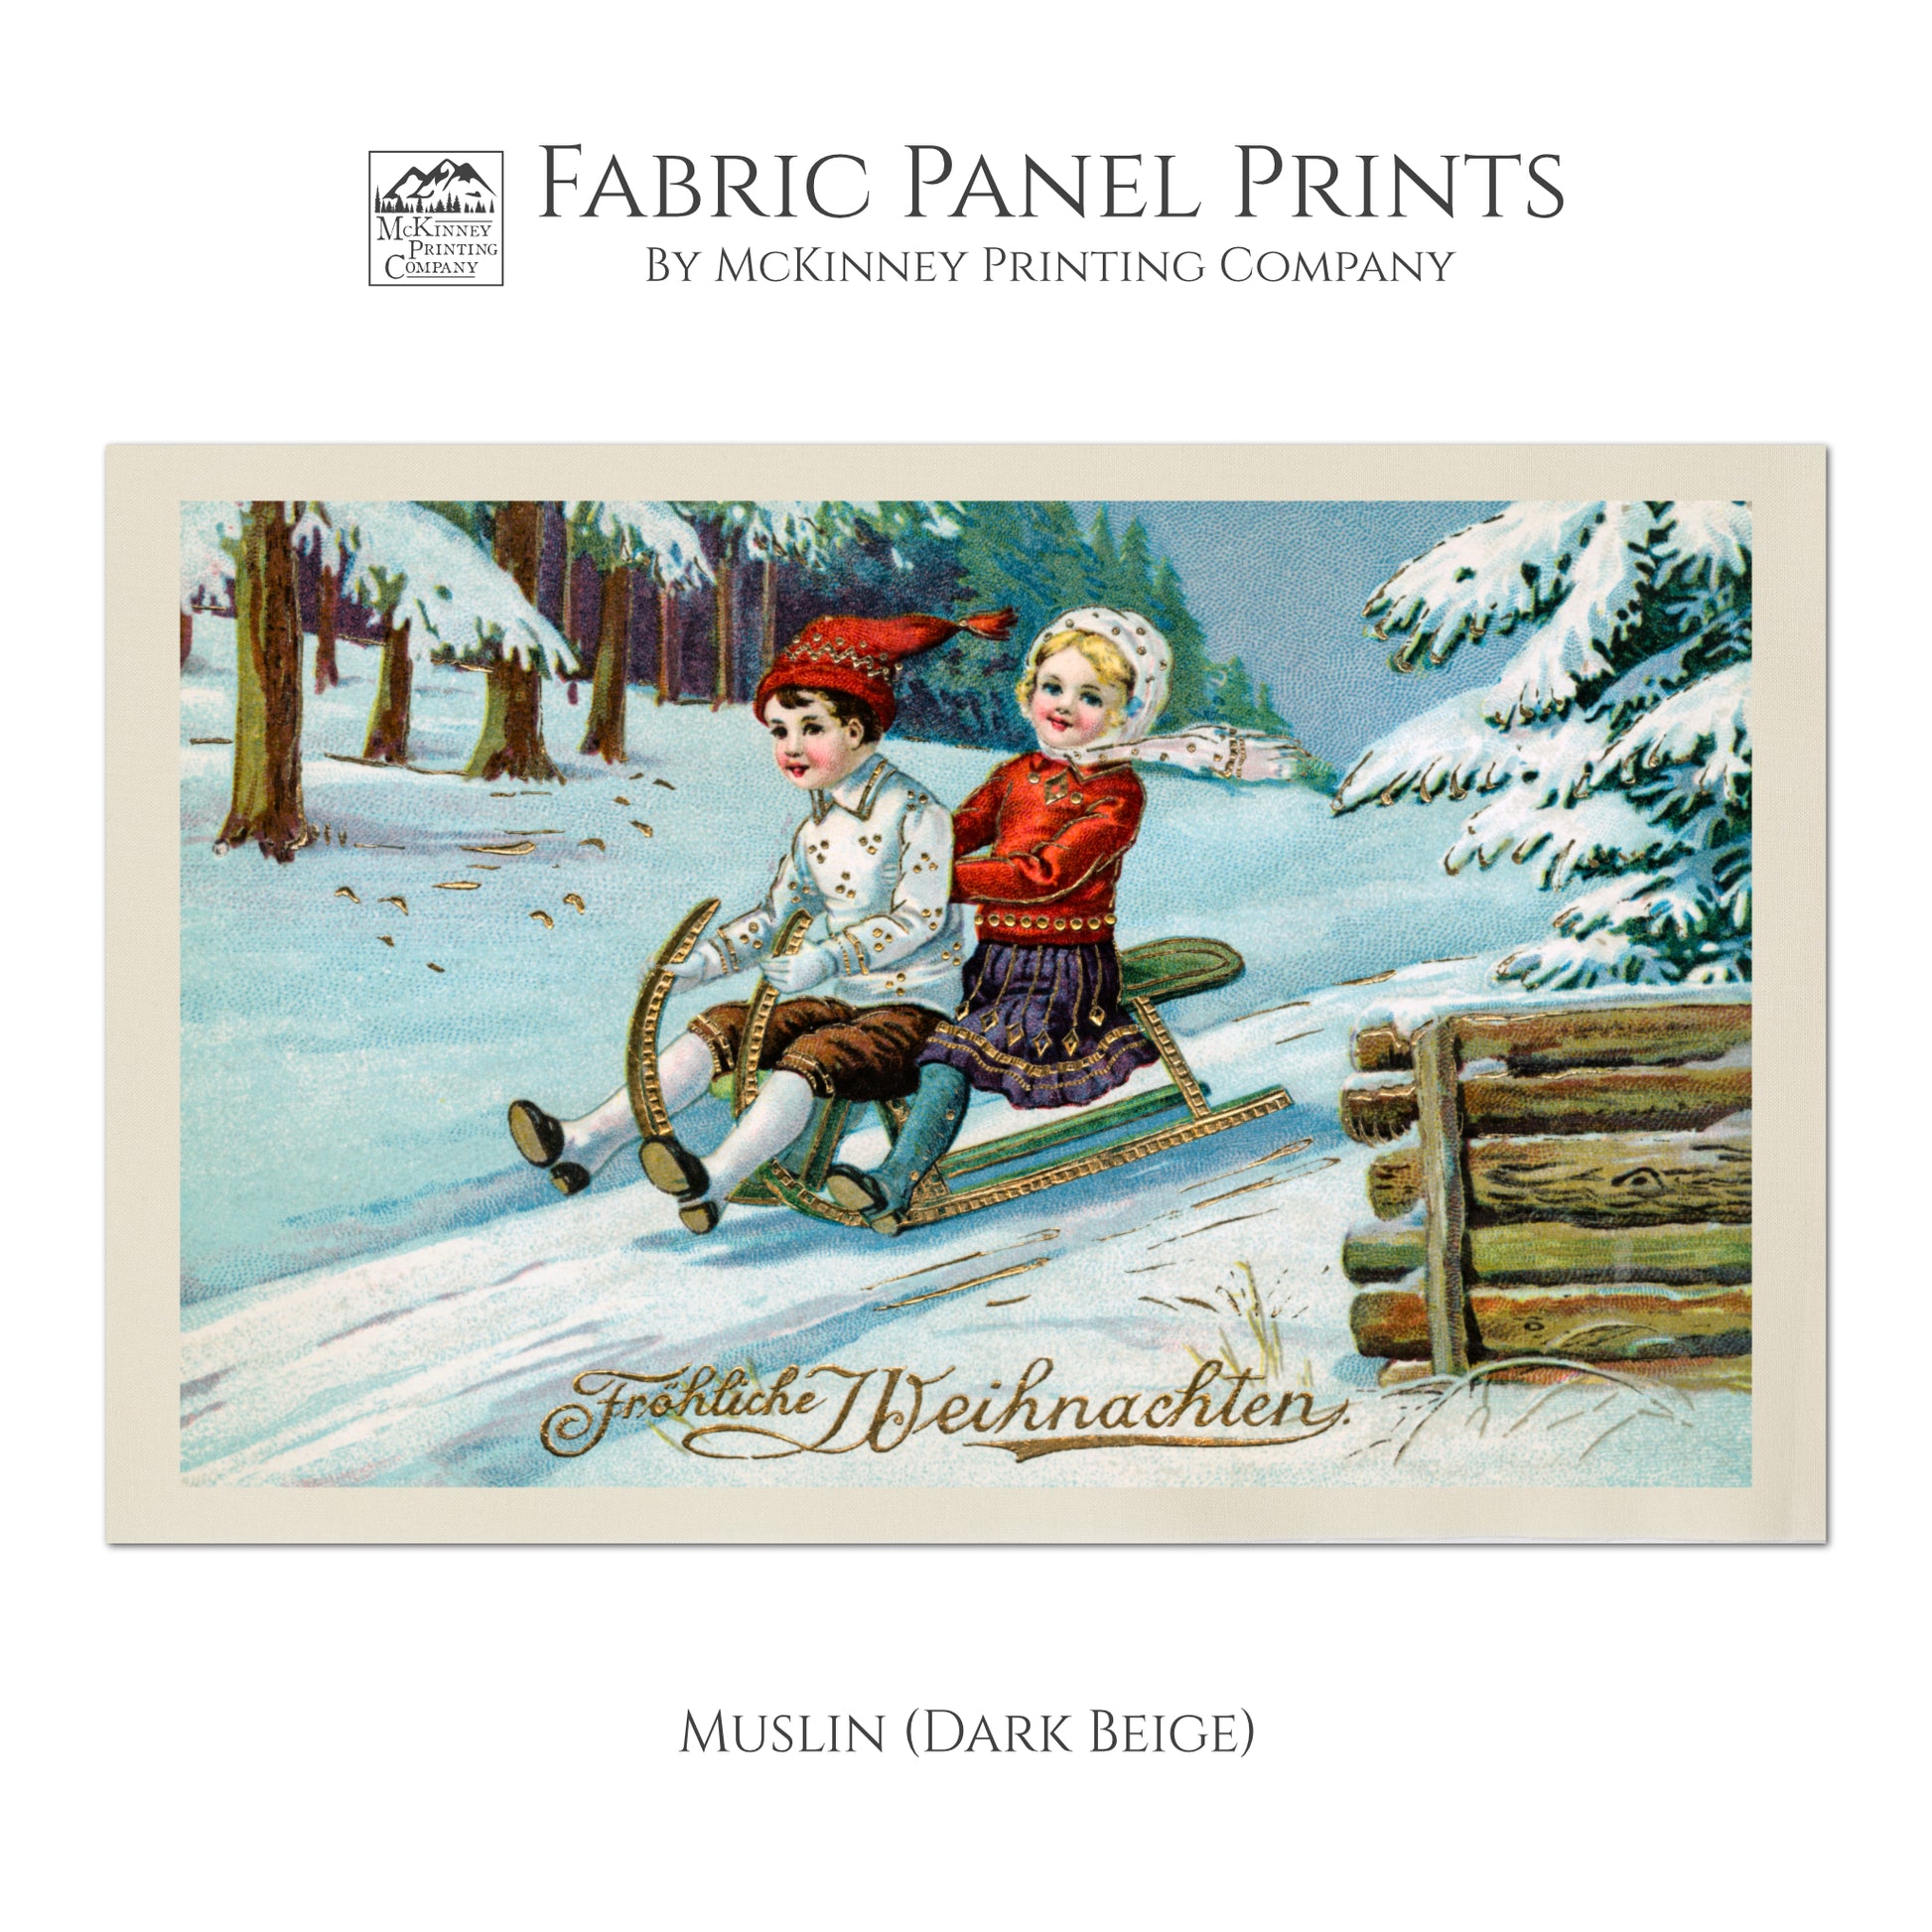 Children Sledding, Christmas Fabric Panel, Victorian Decor, Antique, Vintage, Fabric Panel Print - Muslin